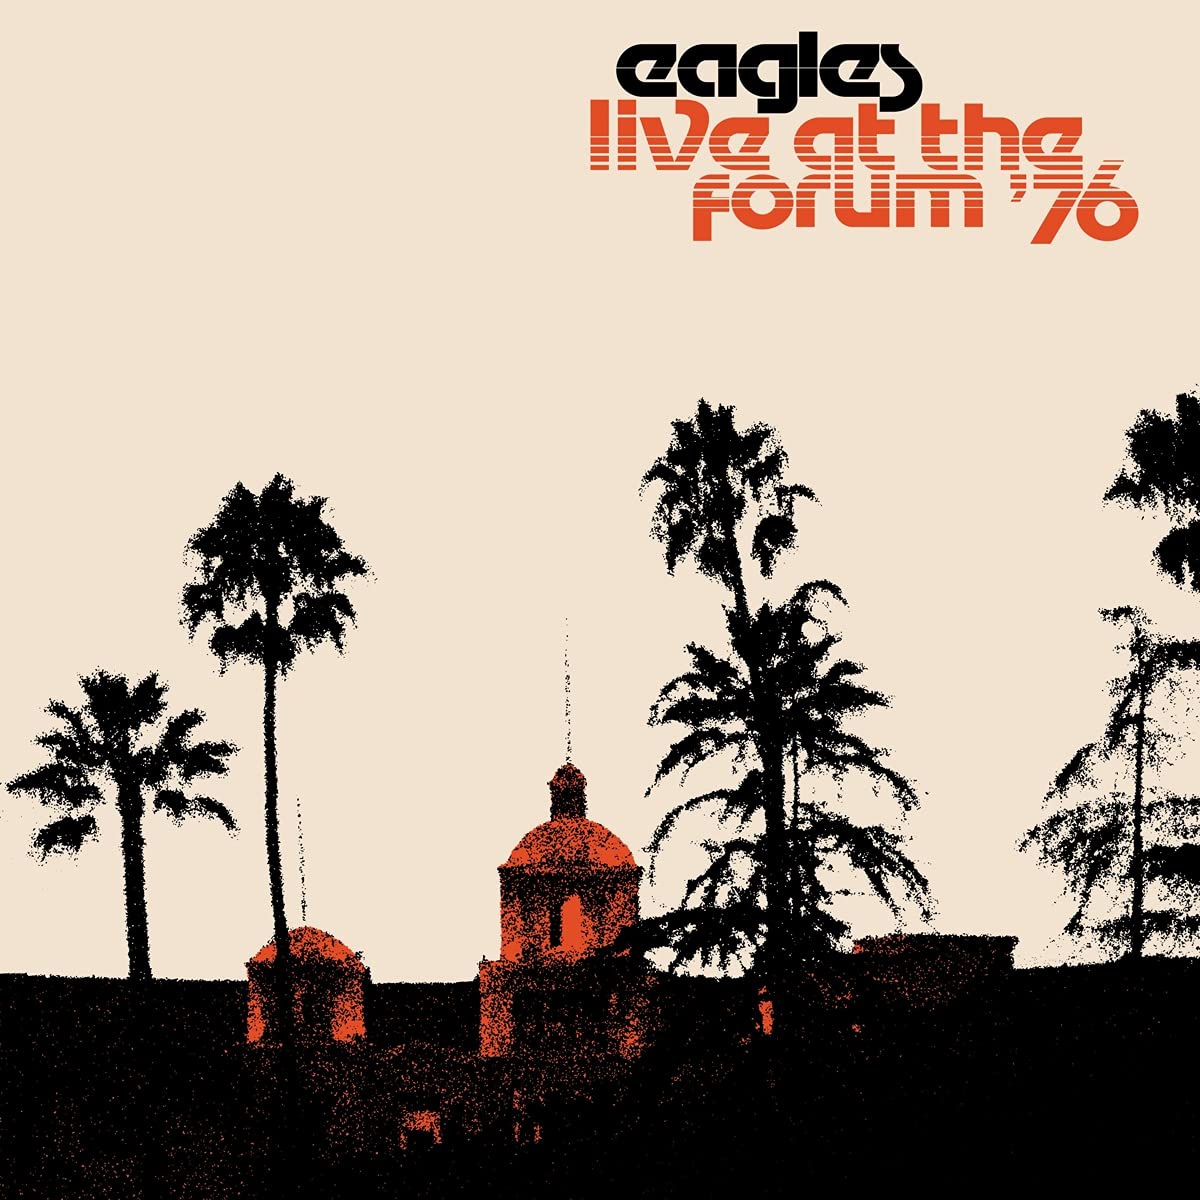 Eagles - Live at the Forum '76 (Vinyl 2LP)